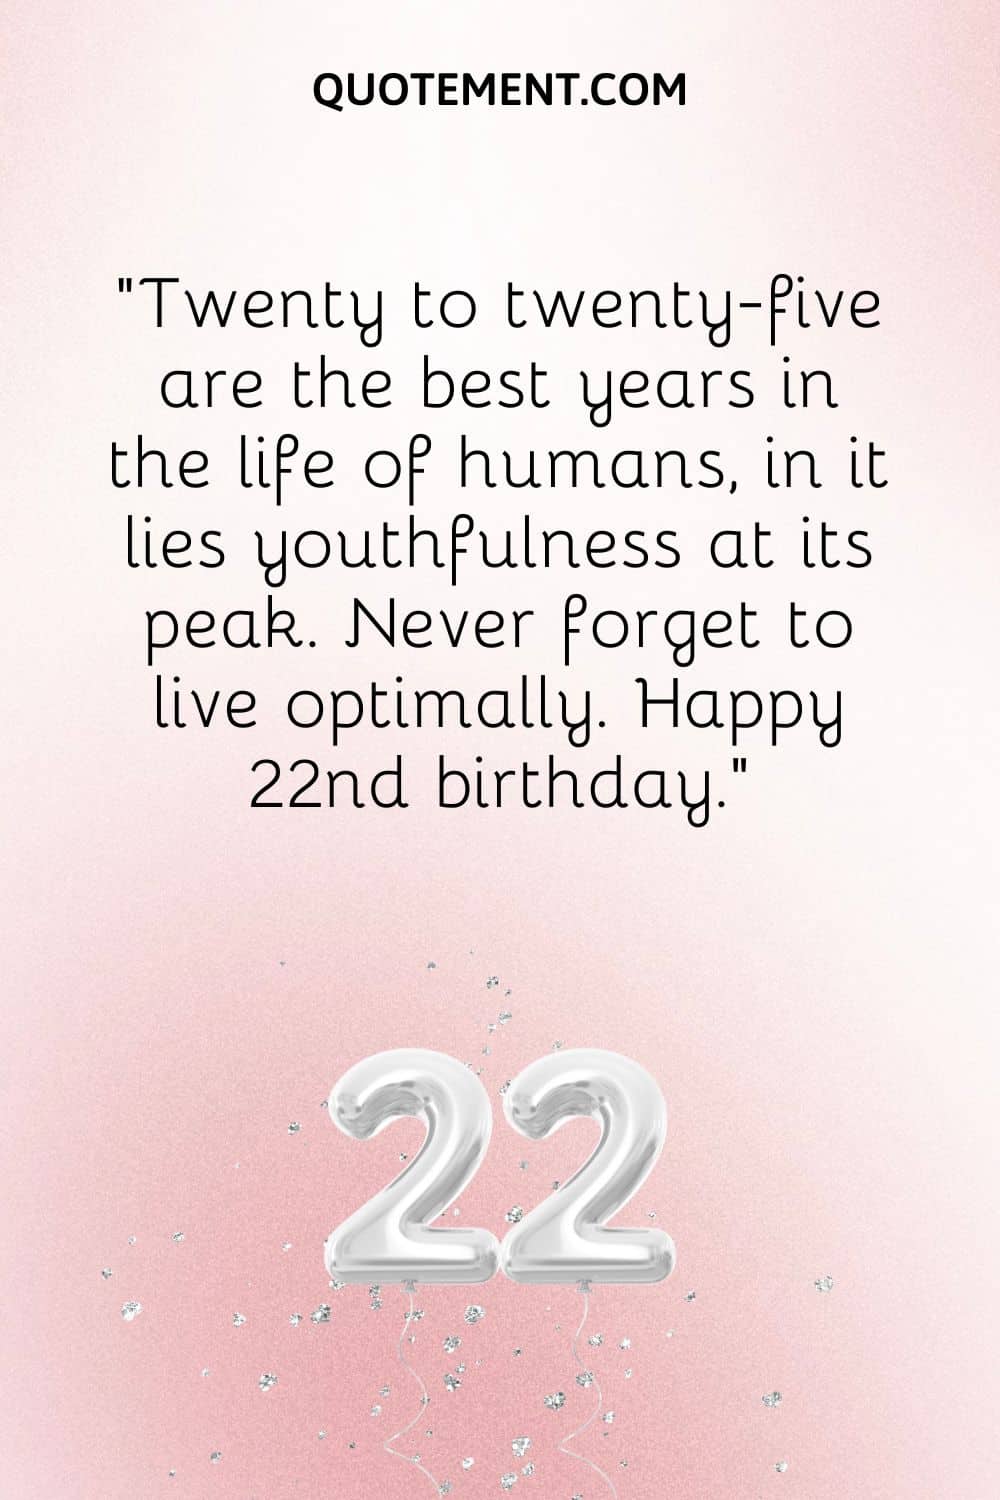 balloon number 22 image representing happy 22nd birthday wish